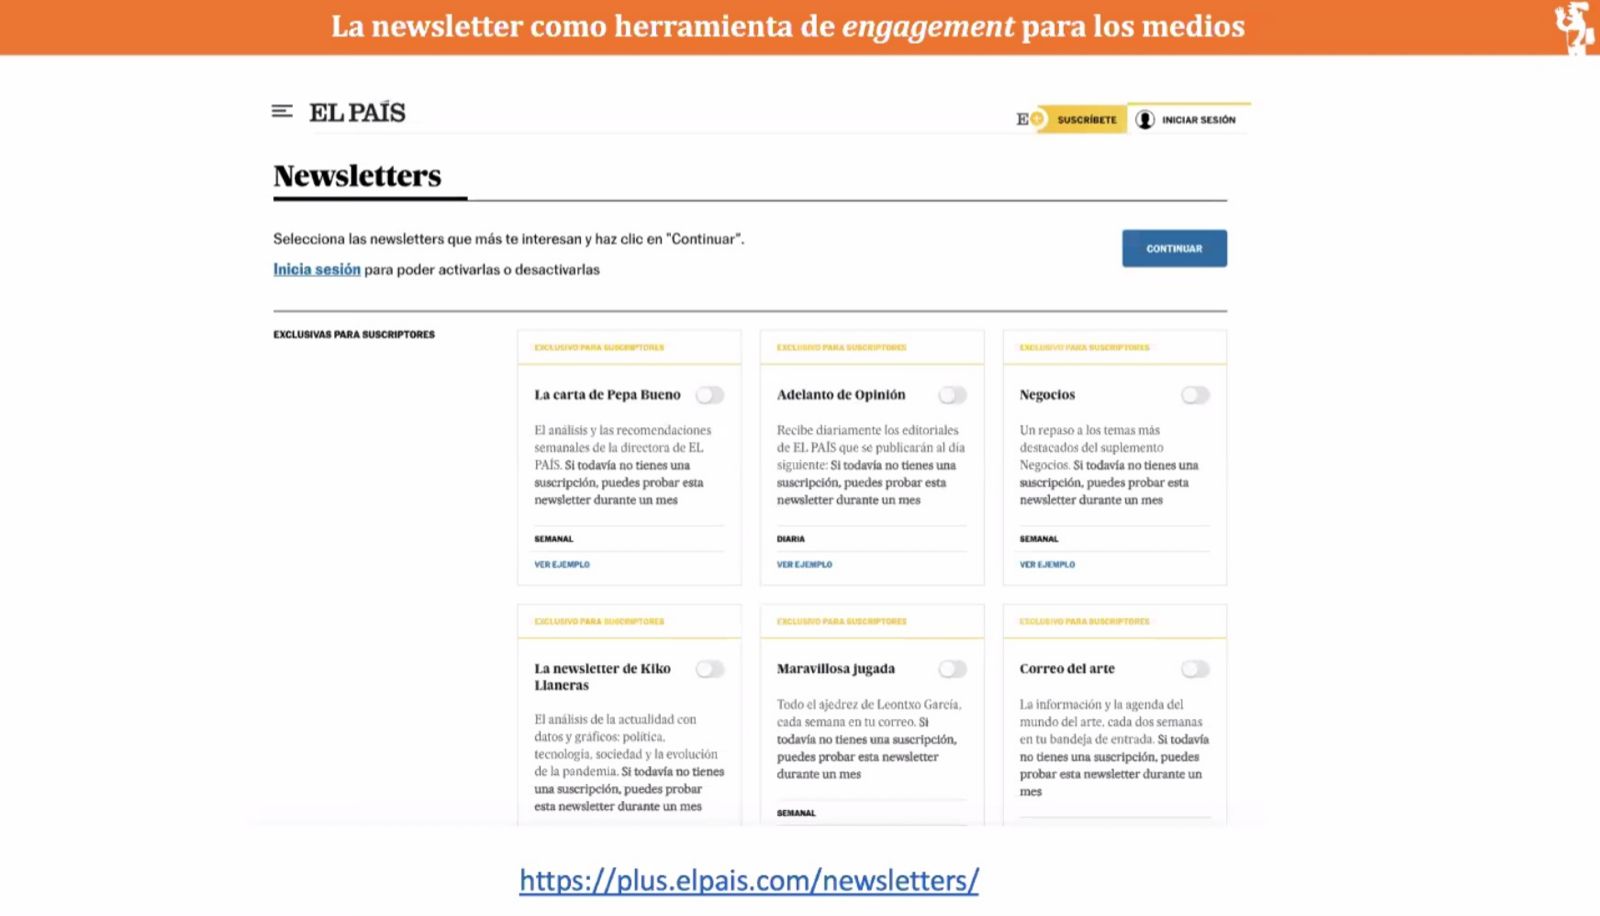 El País - Newsletters